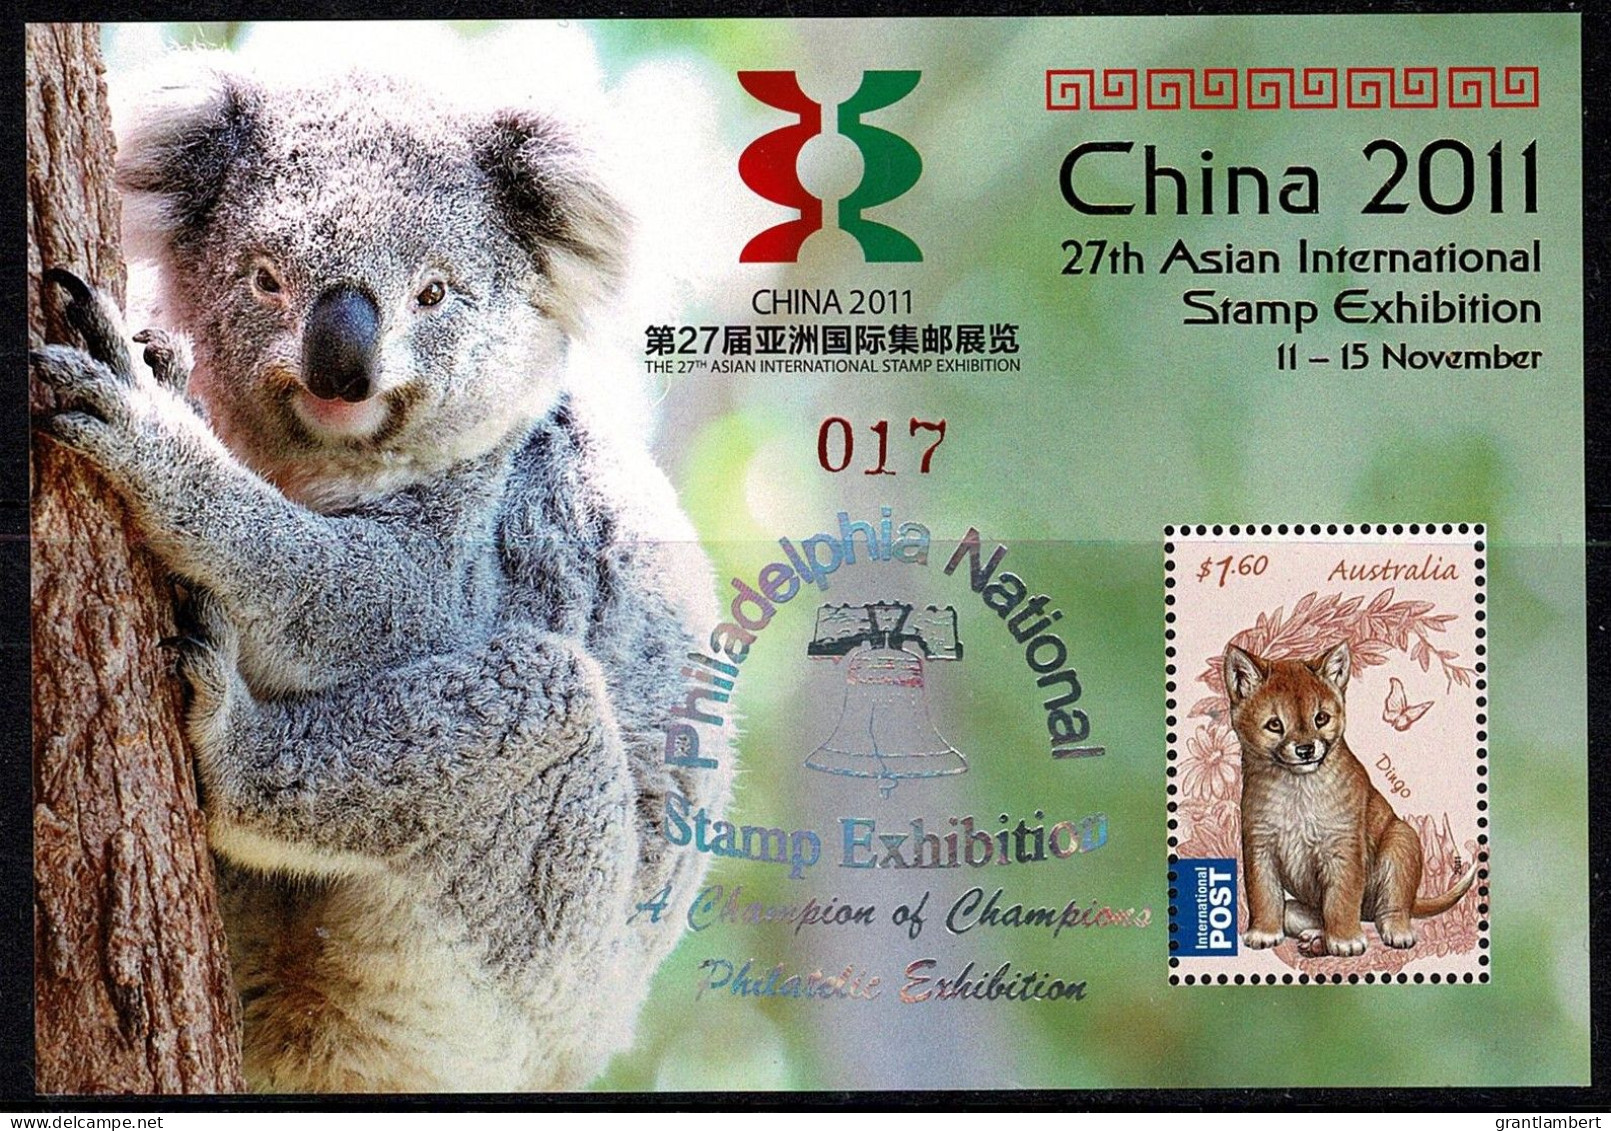 Australia 2011 China 2011 Exhib. Minisheet OP Philadelphia National Ex. 017 MNH - Mint Stamps